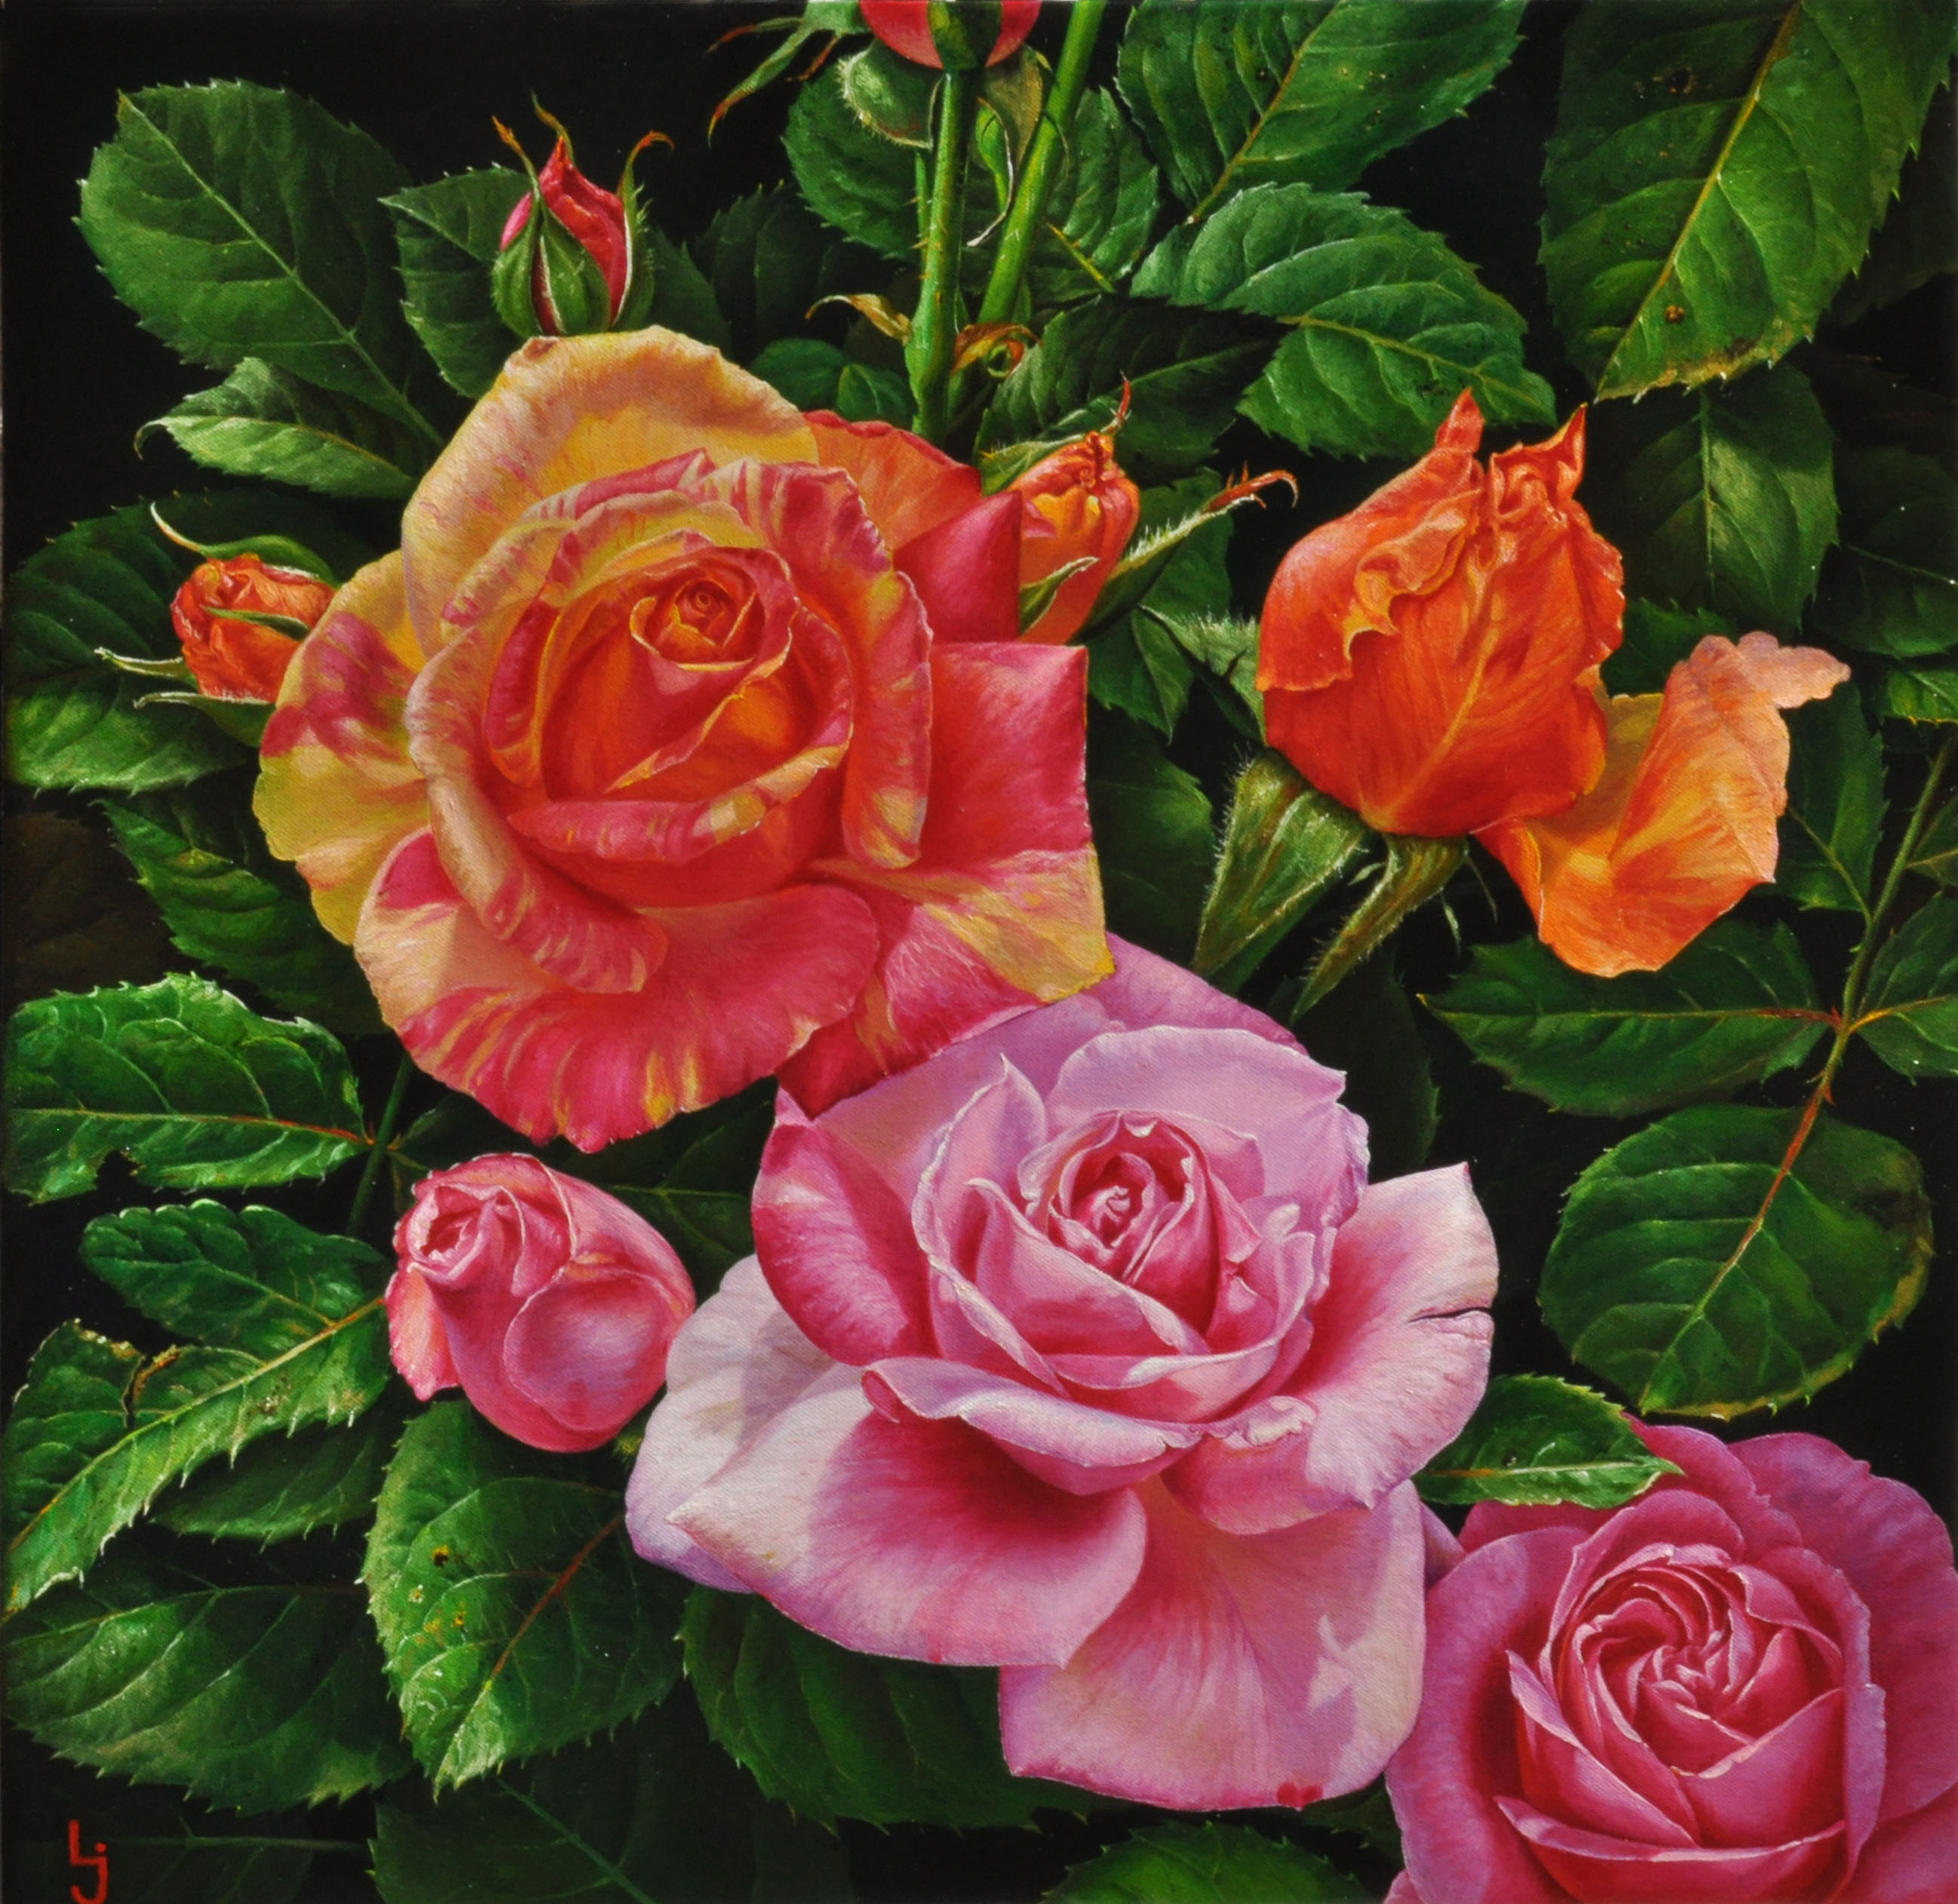 Three Kinds of Roses by Layong Jingga Probo | Lethbridge 20000 2021 Finalists | Lethbridge Gallery